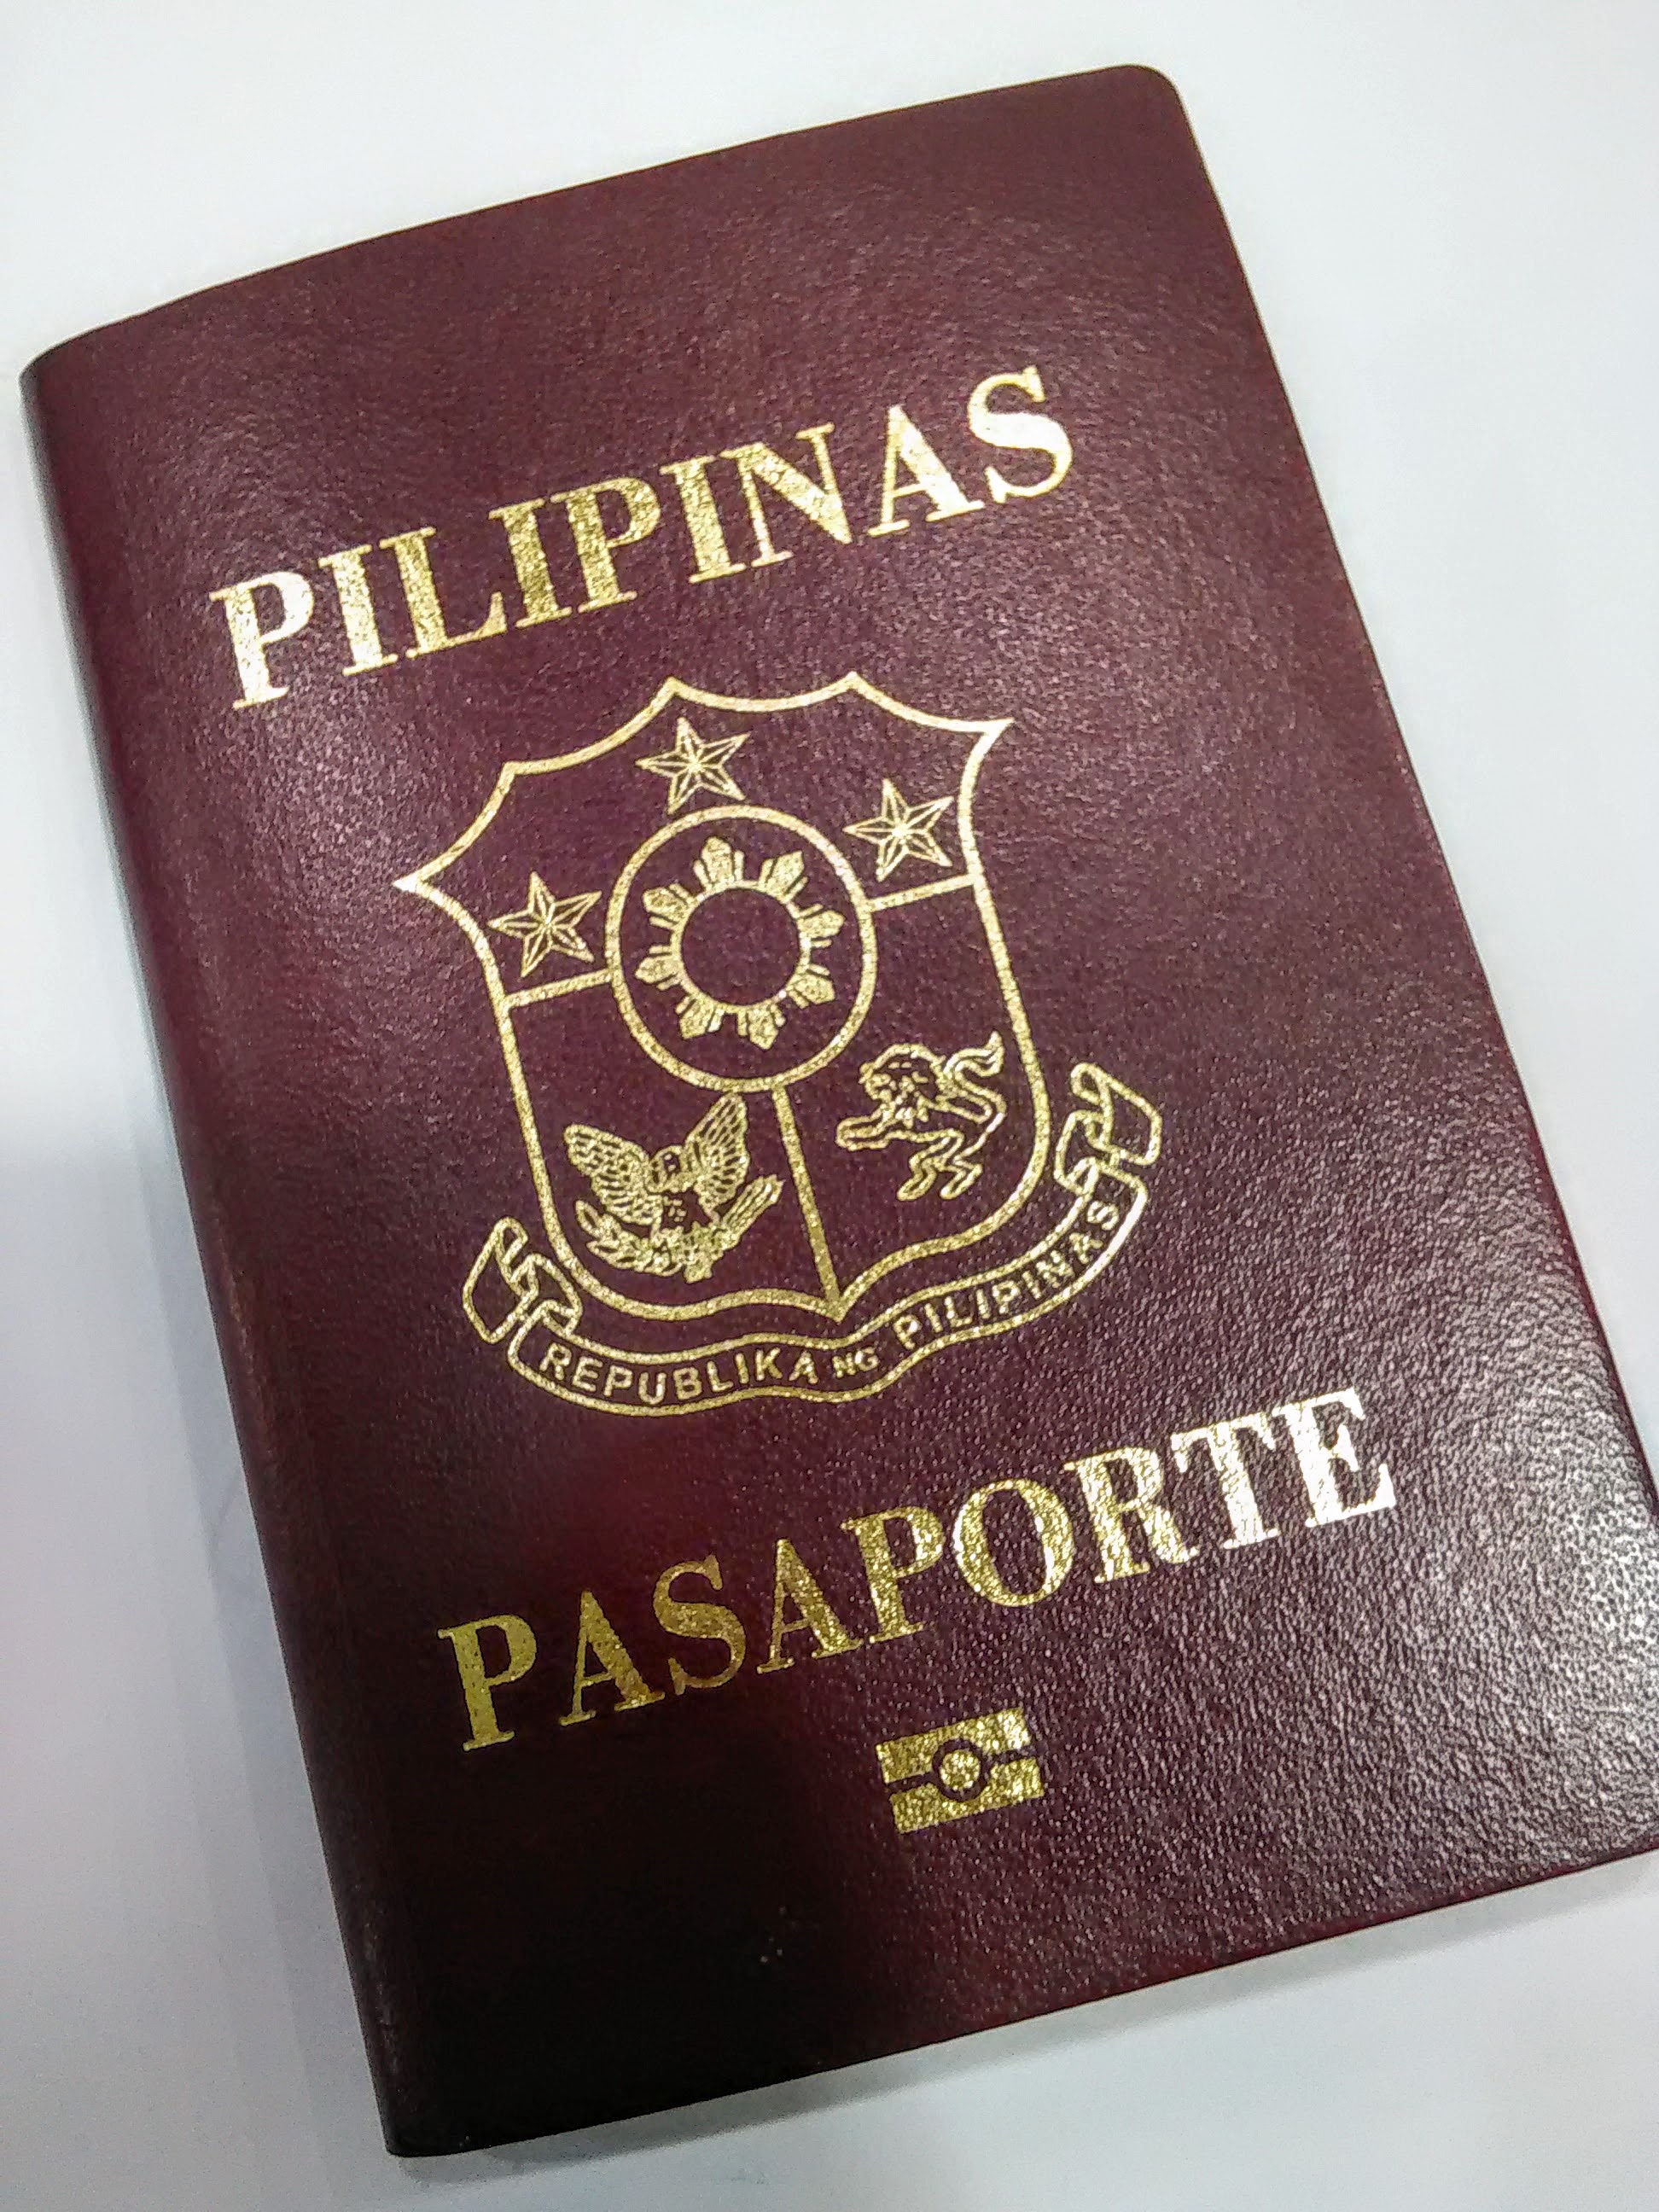 Philippine Passport Aesthetic